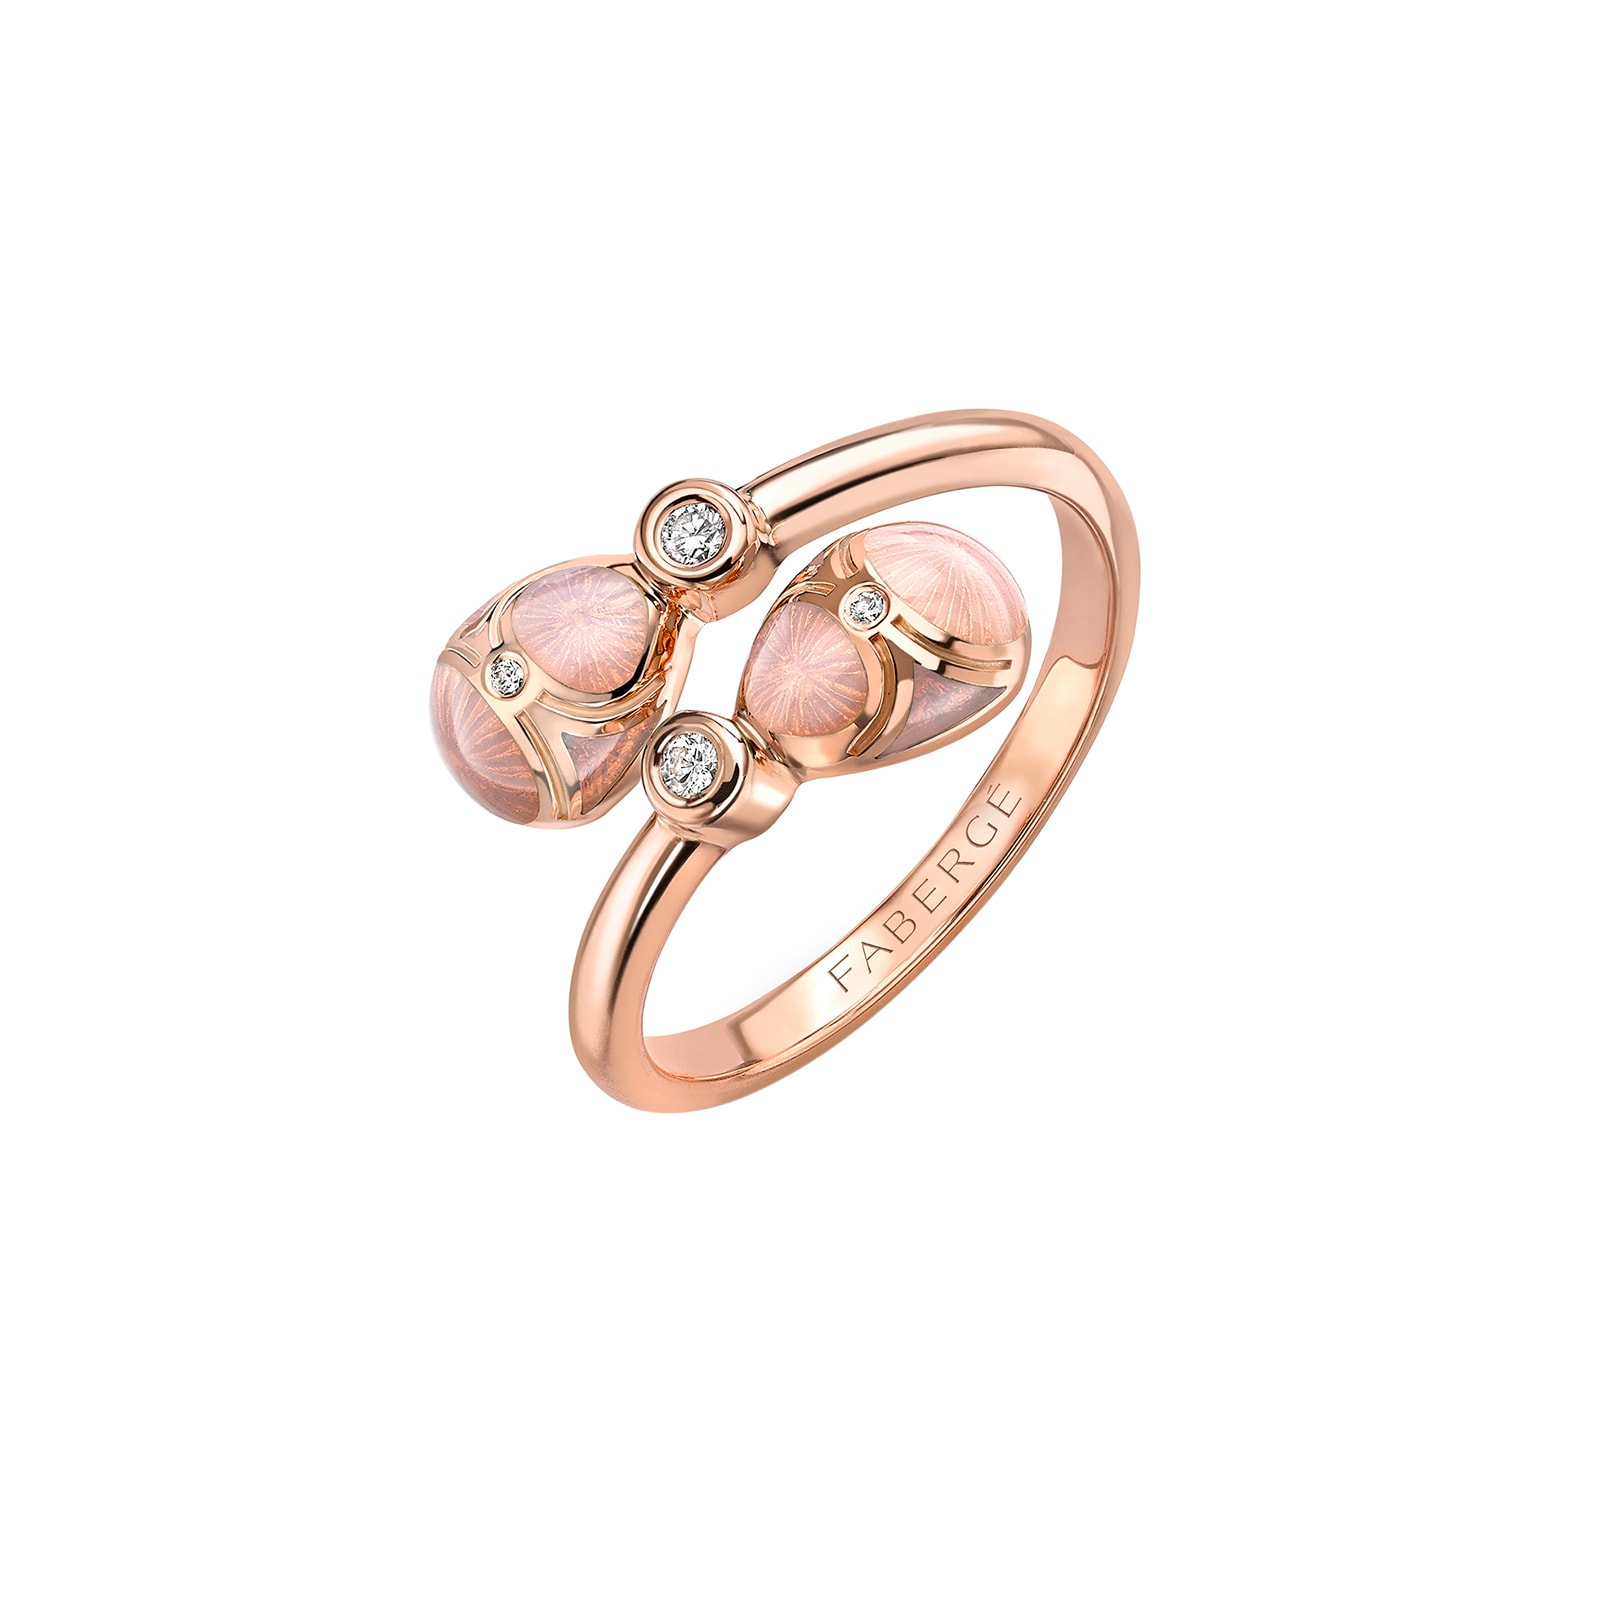 Heritage 18ct Rose Gold Diamond & Pink Enamel Crossover Ring - Ring Size M